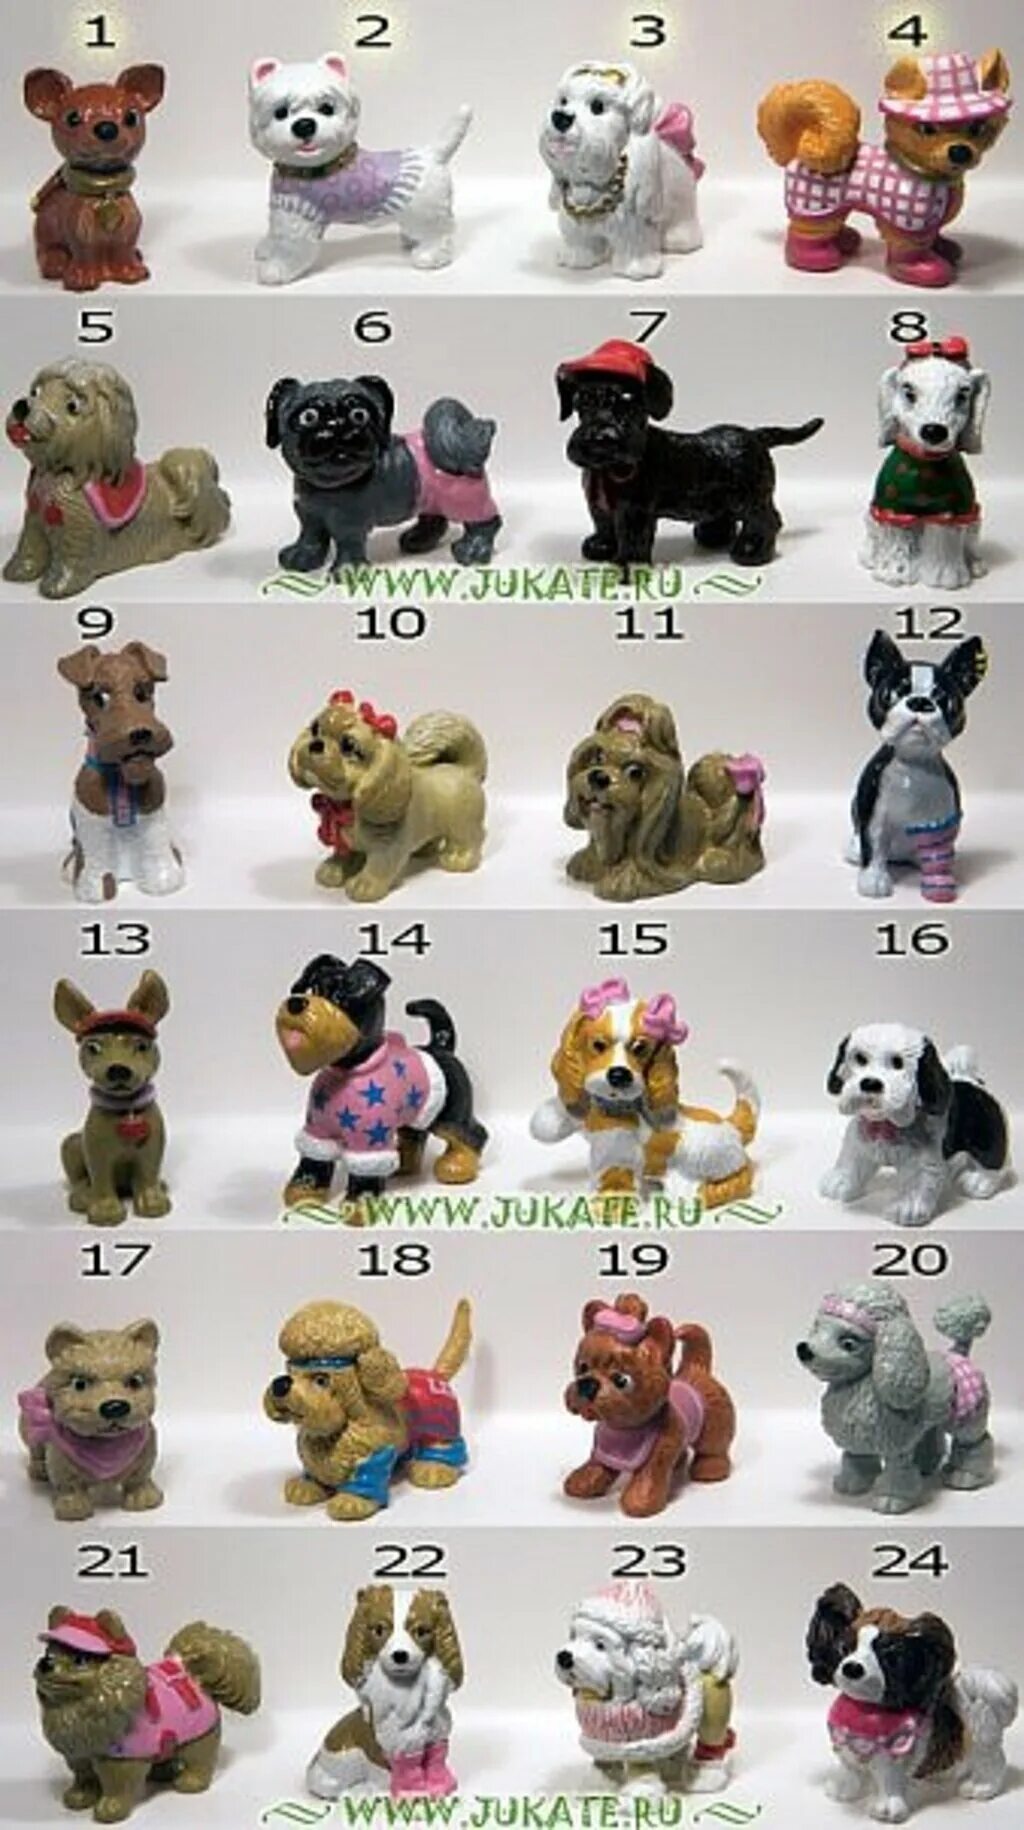 Киндер собачка. Ландрин собачки. Коллекция фигурок собак. Коллекция маленьких игрушечных собак. Киндеры собачки.